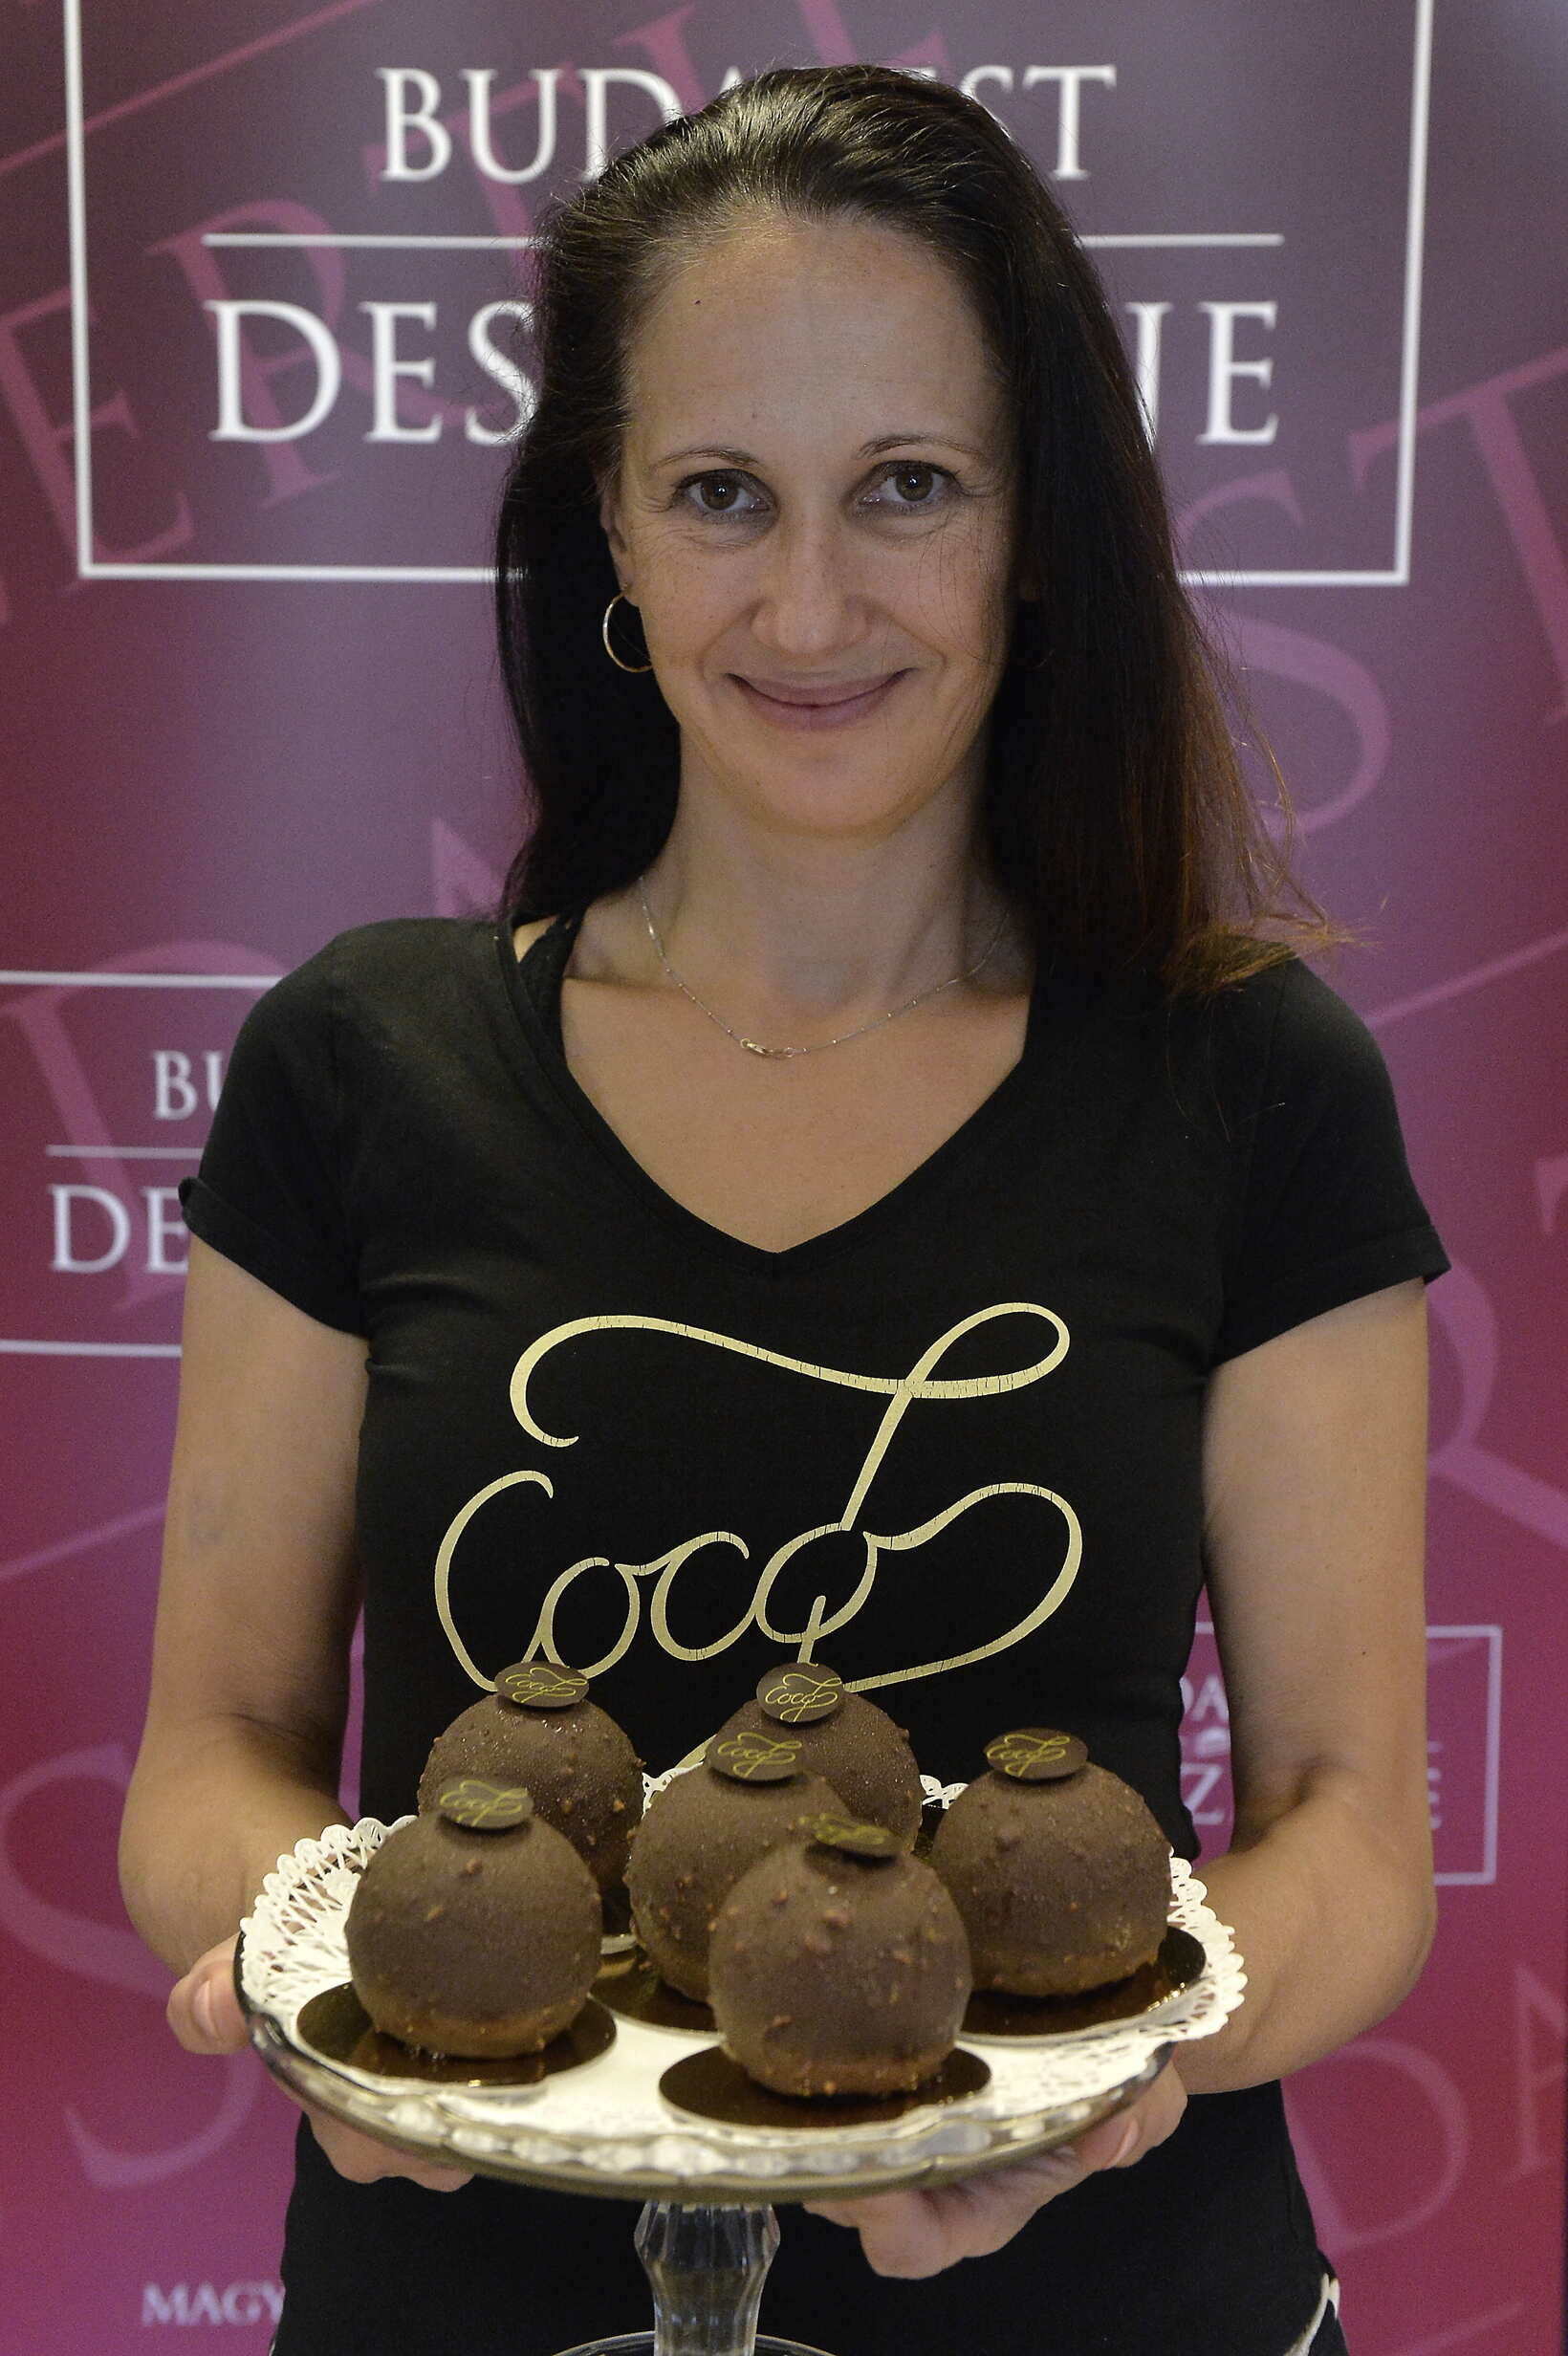 Desert-de-Budapest-Coco7-Chocolate-Magazin-tort-mancare